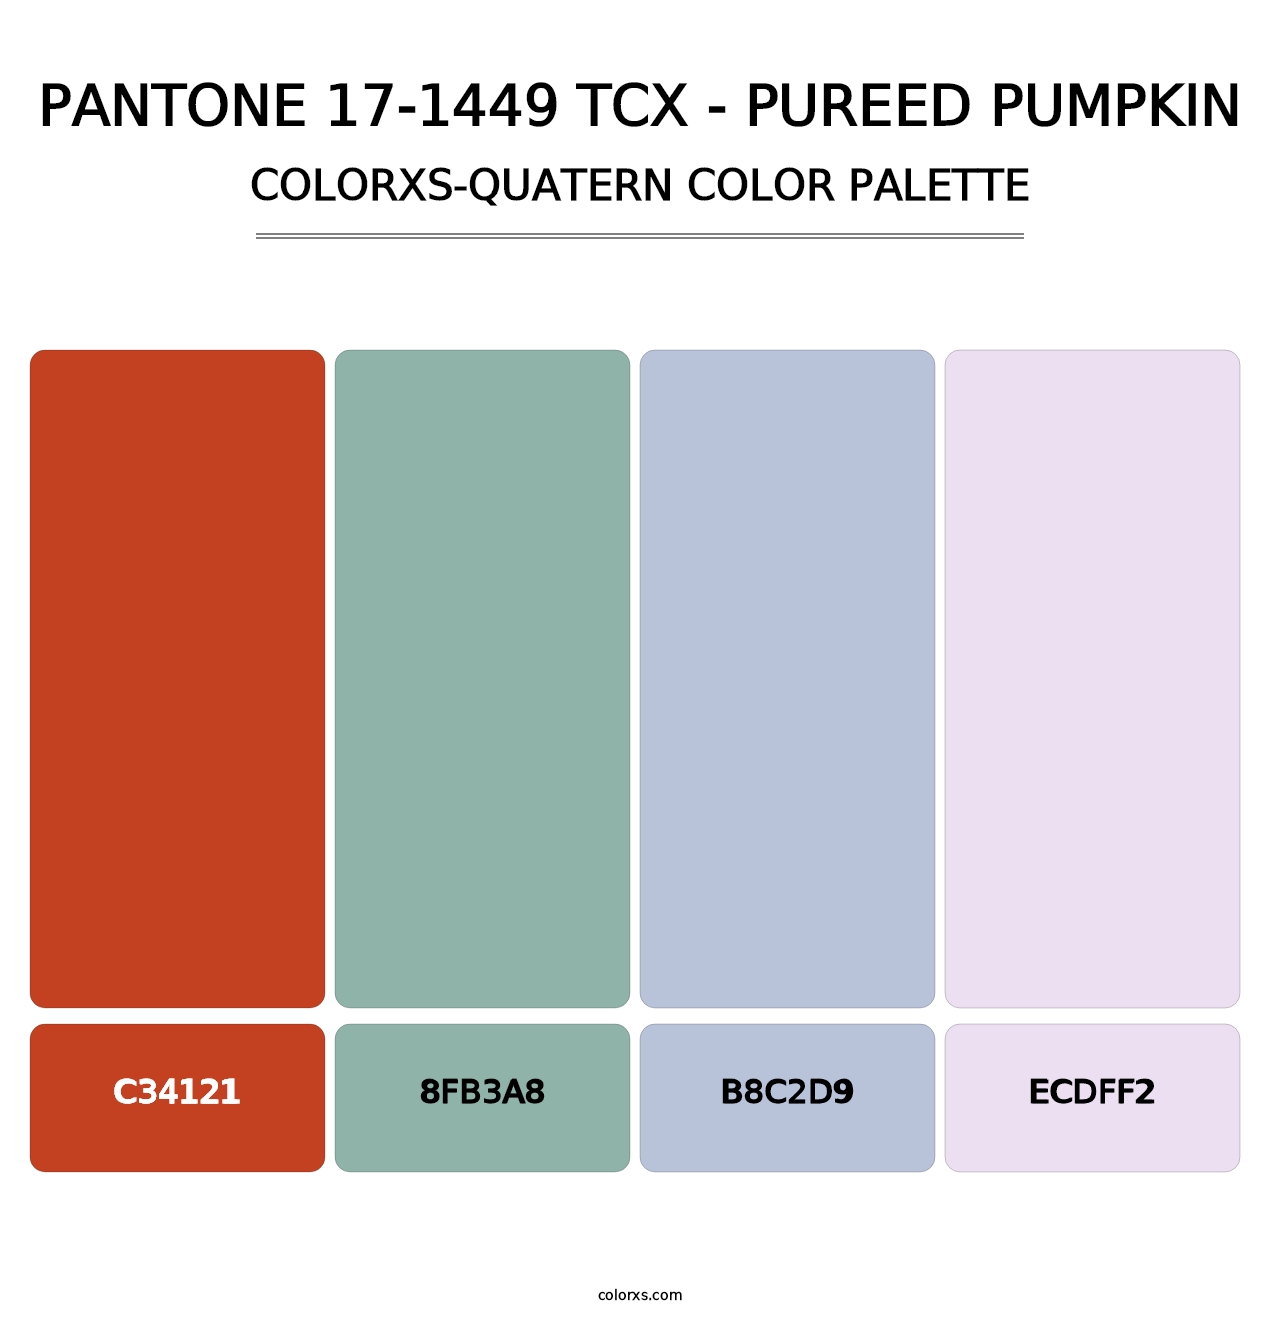 PANTONE 17-1449 TCX - Pureed Pumpkin - Colorxs Quatern Palette